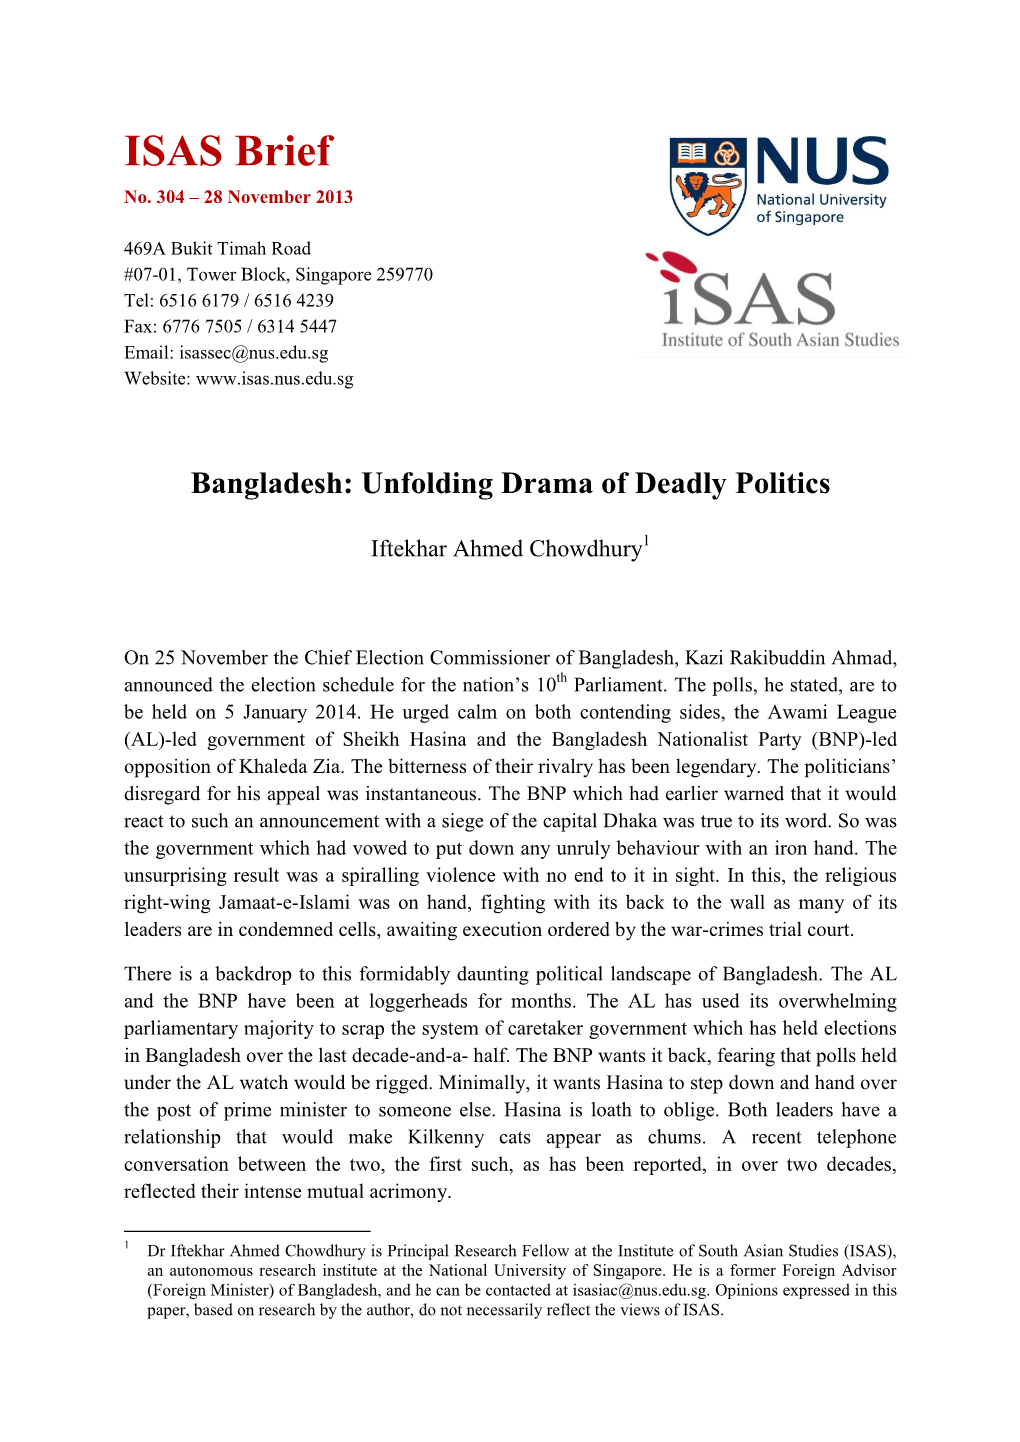 Bangladesh: Unfolding Drama of Deadly Politics